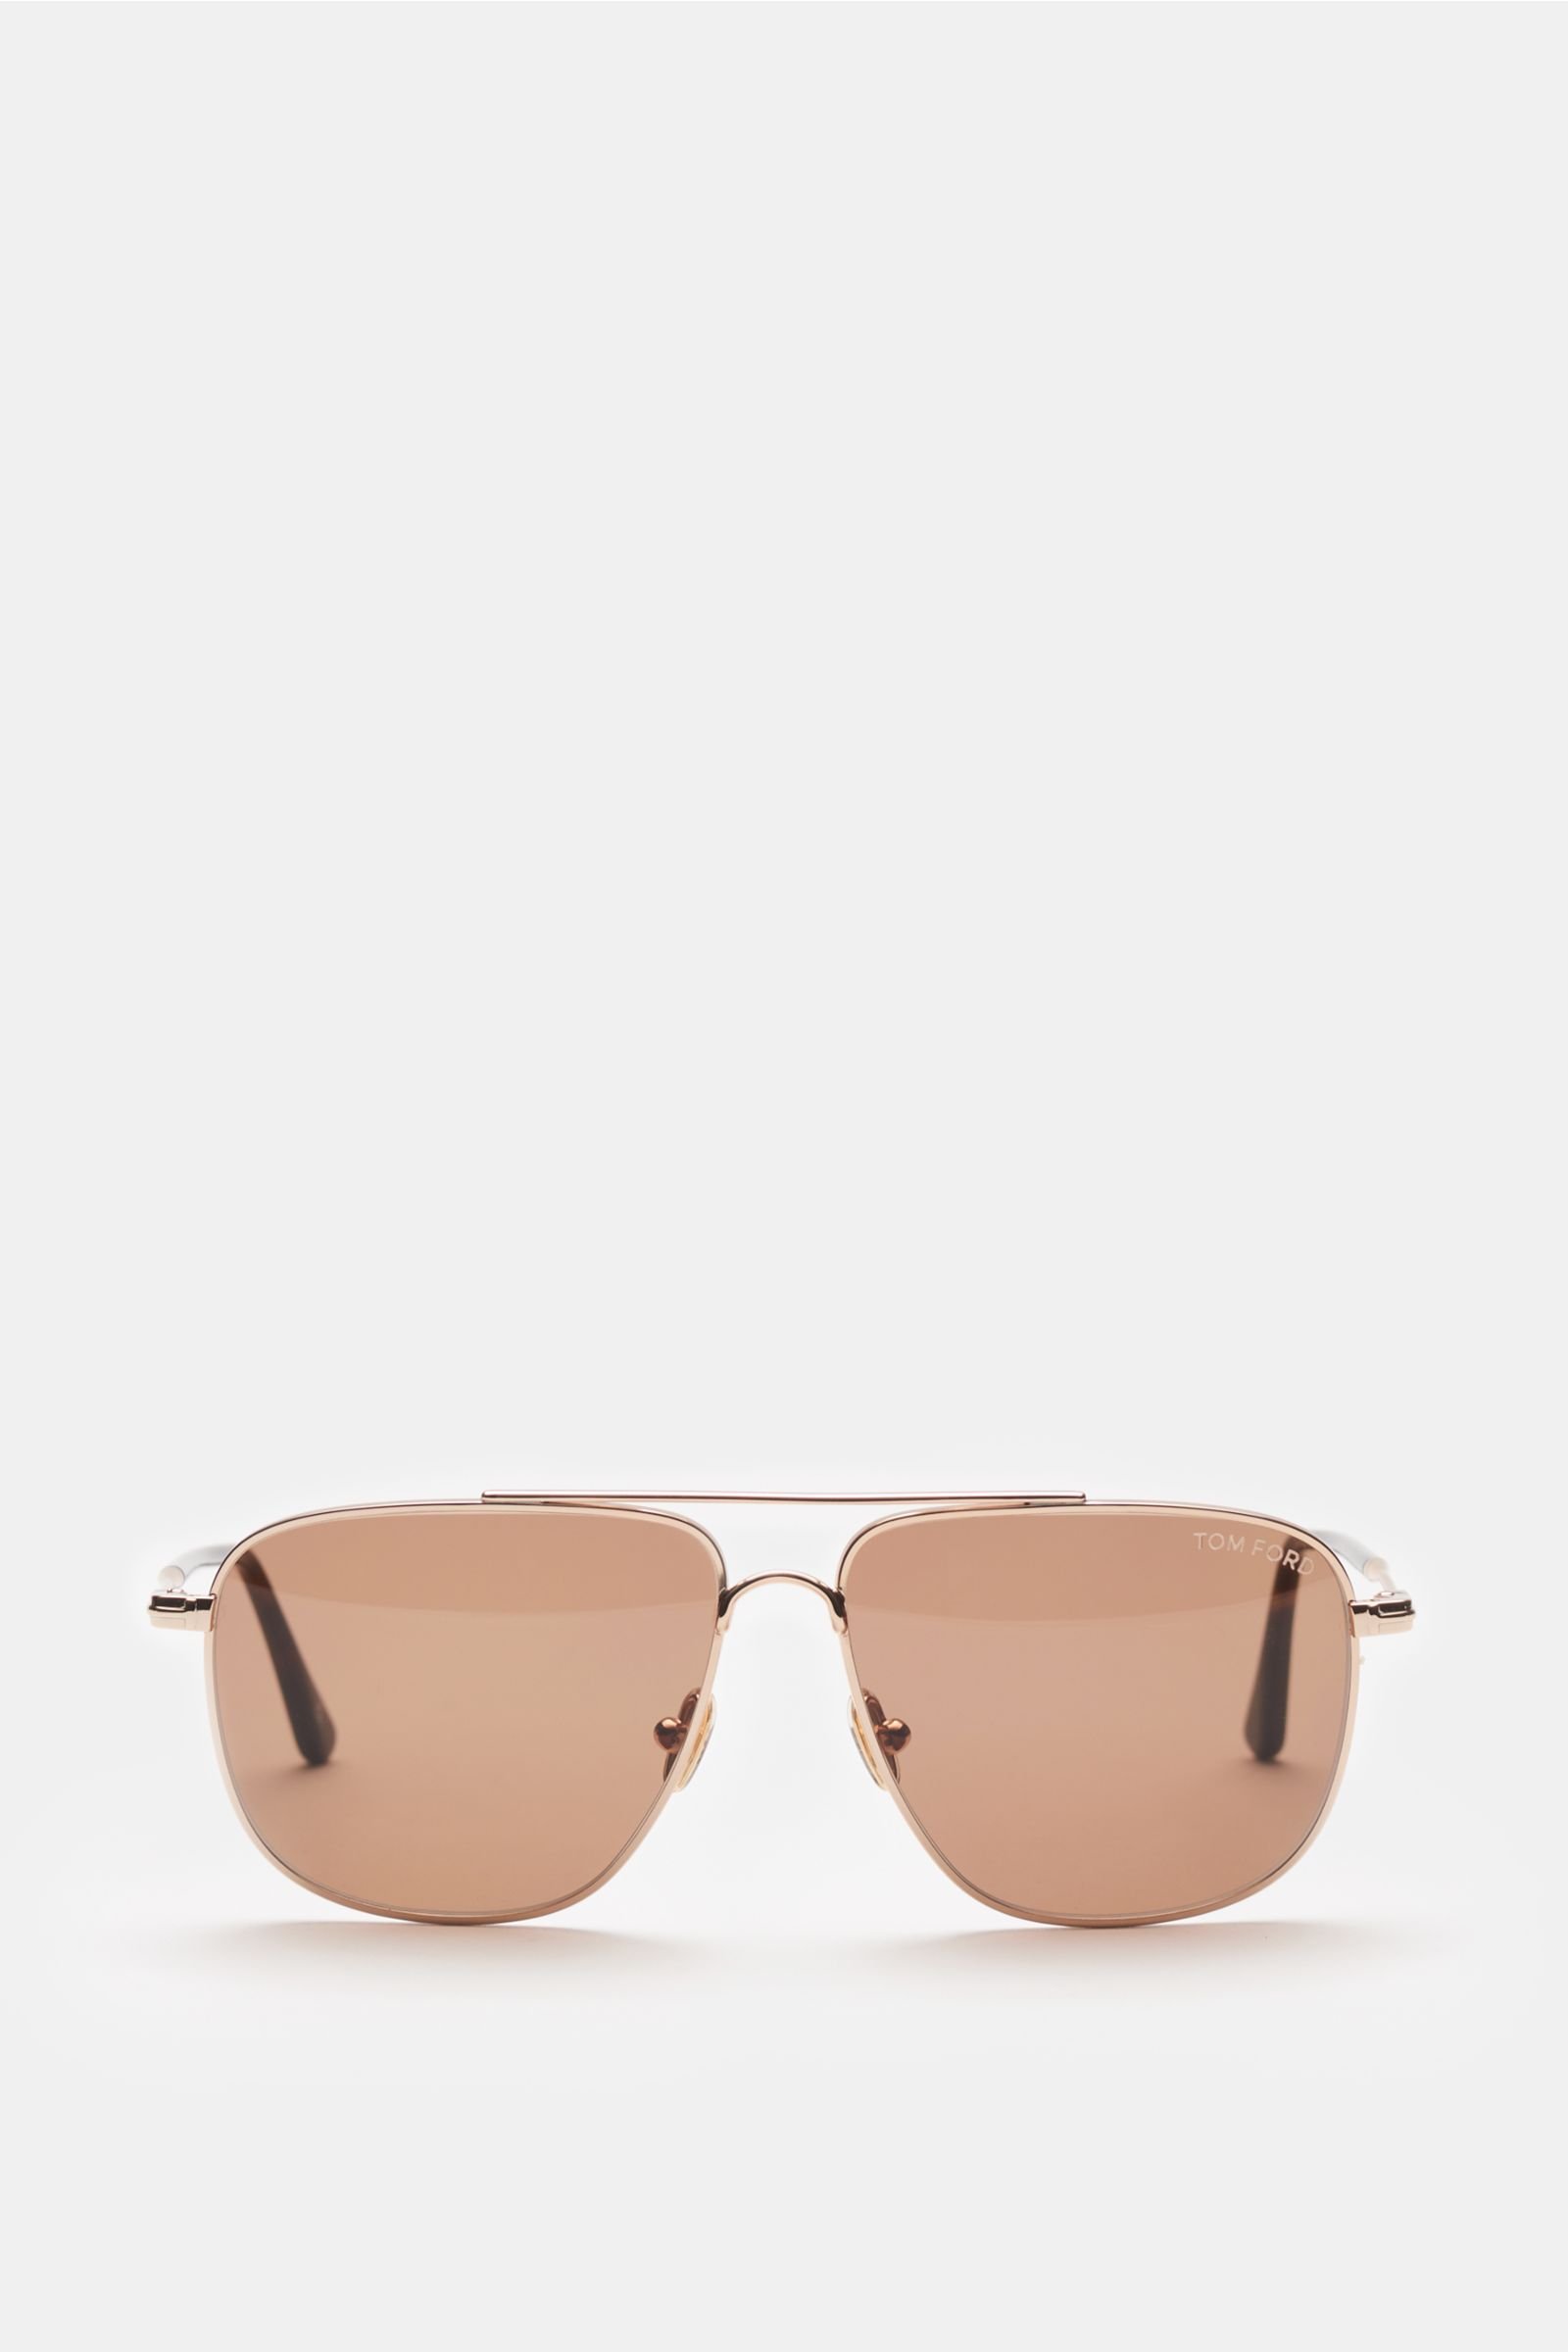 Sunglasses 'Len' silver/brown